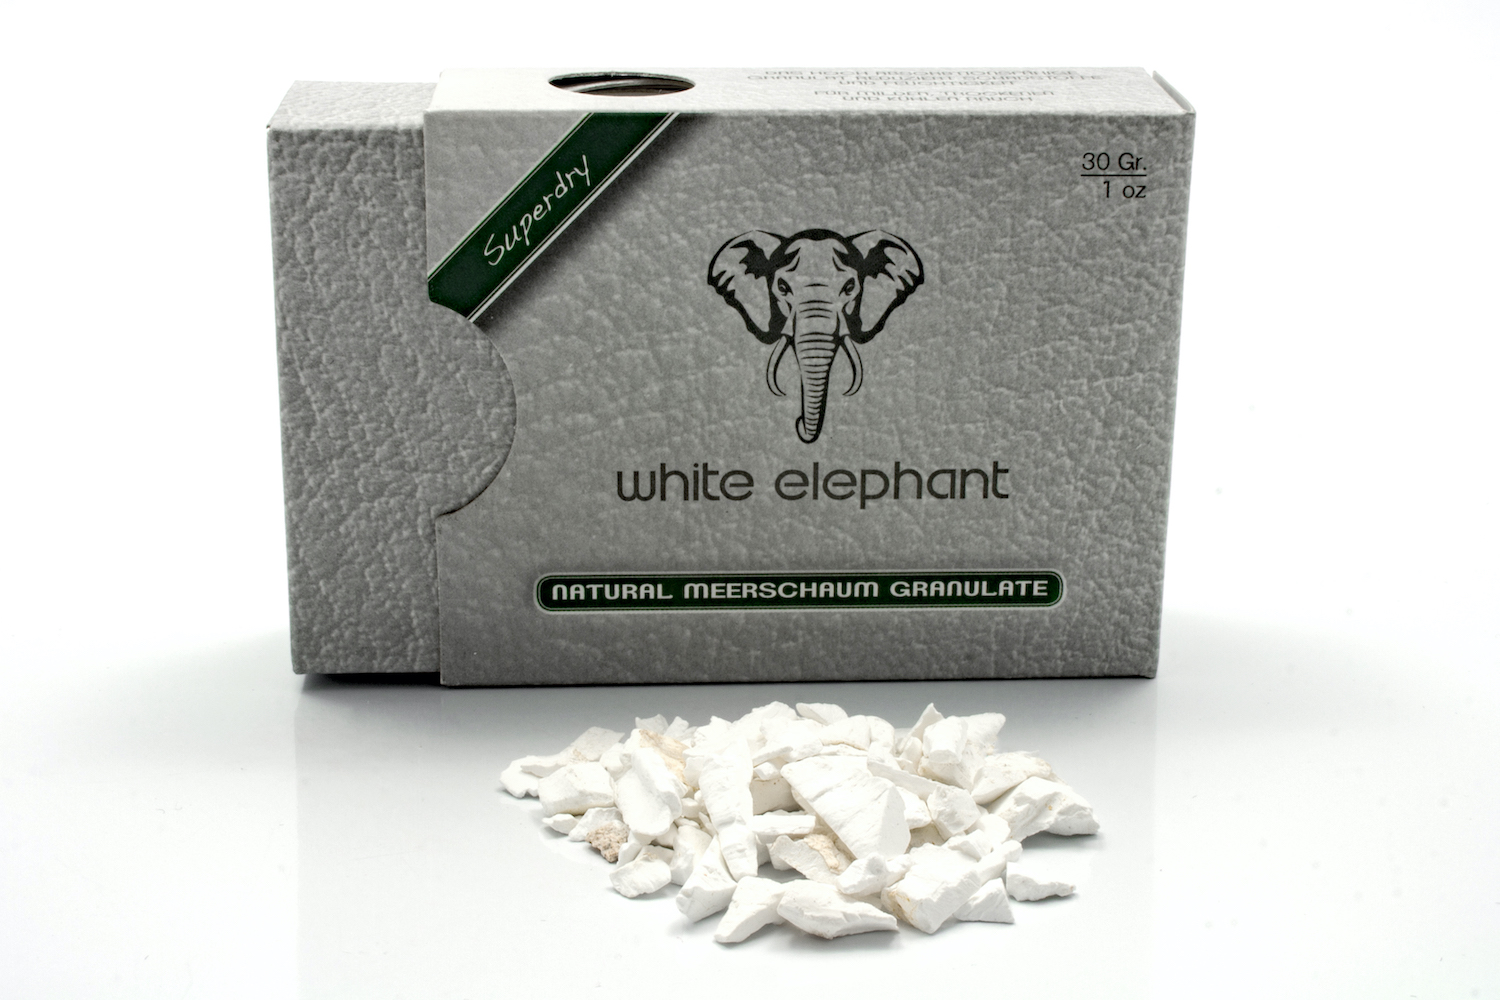 White Elephant Natural Meerschaum Granulate (10x)